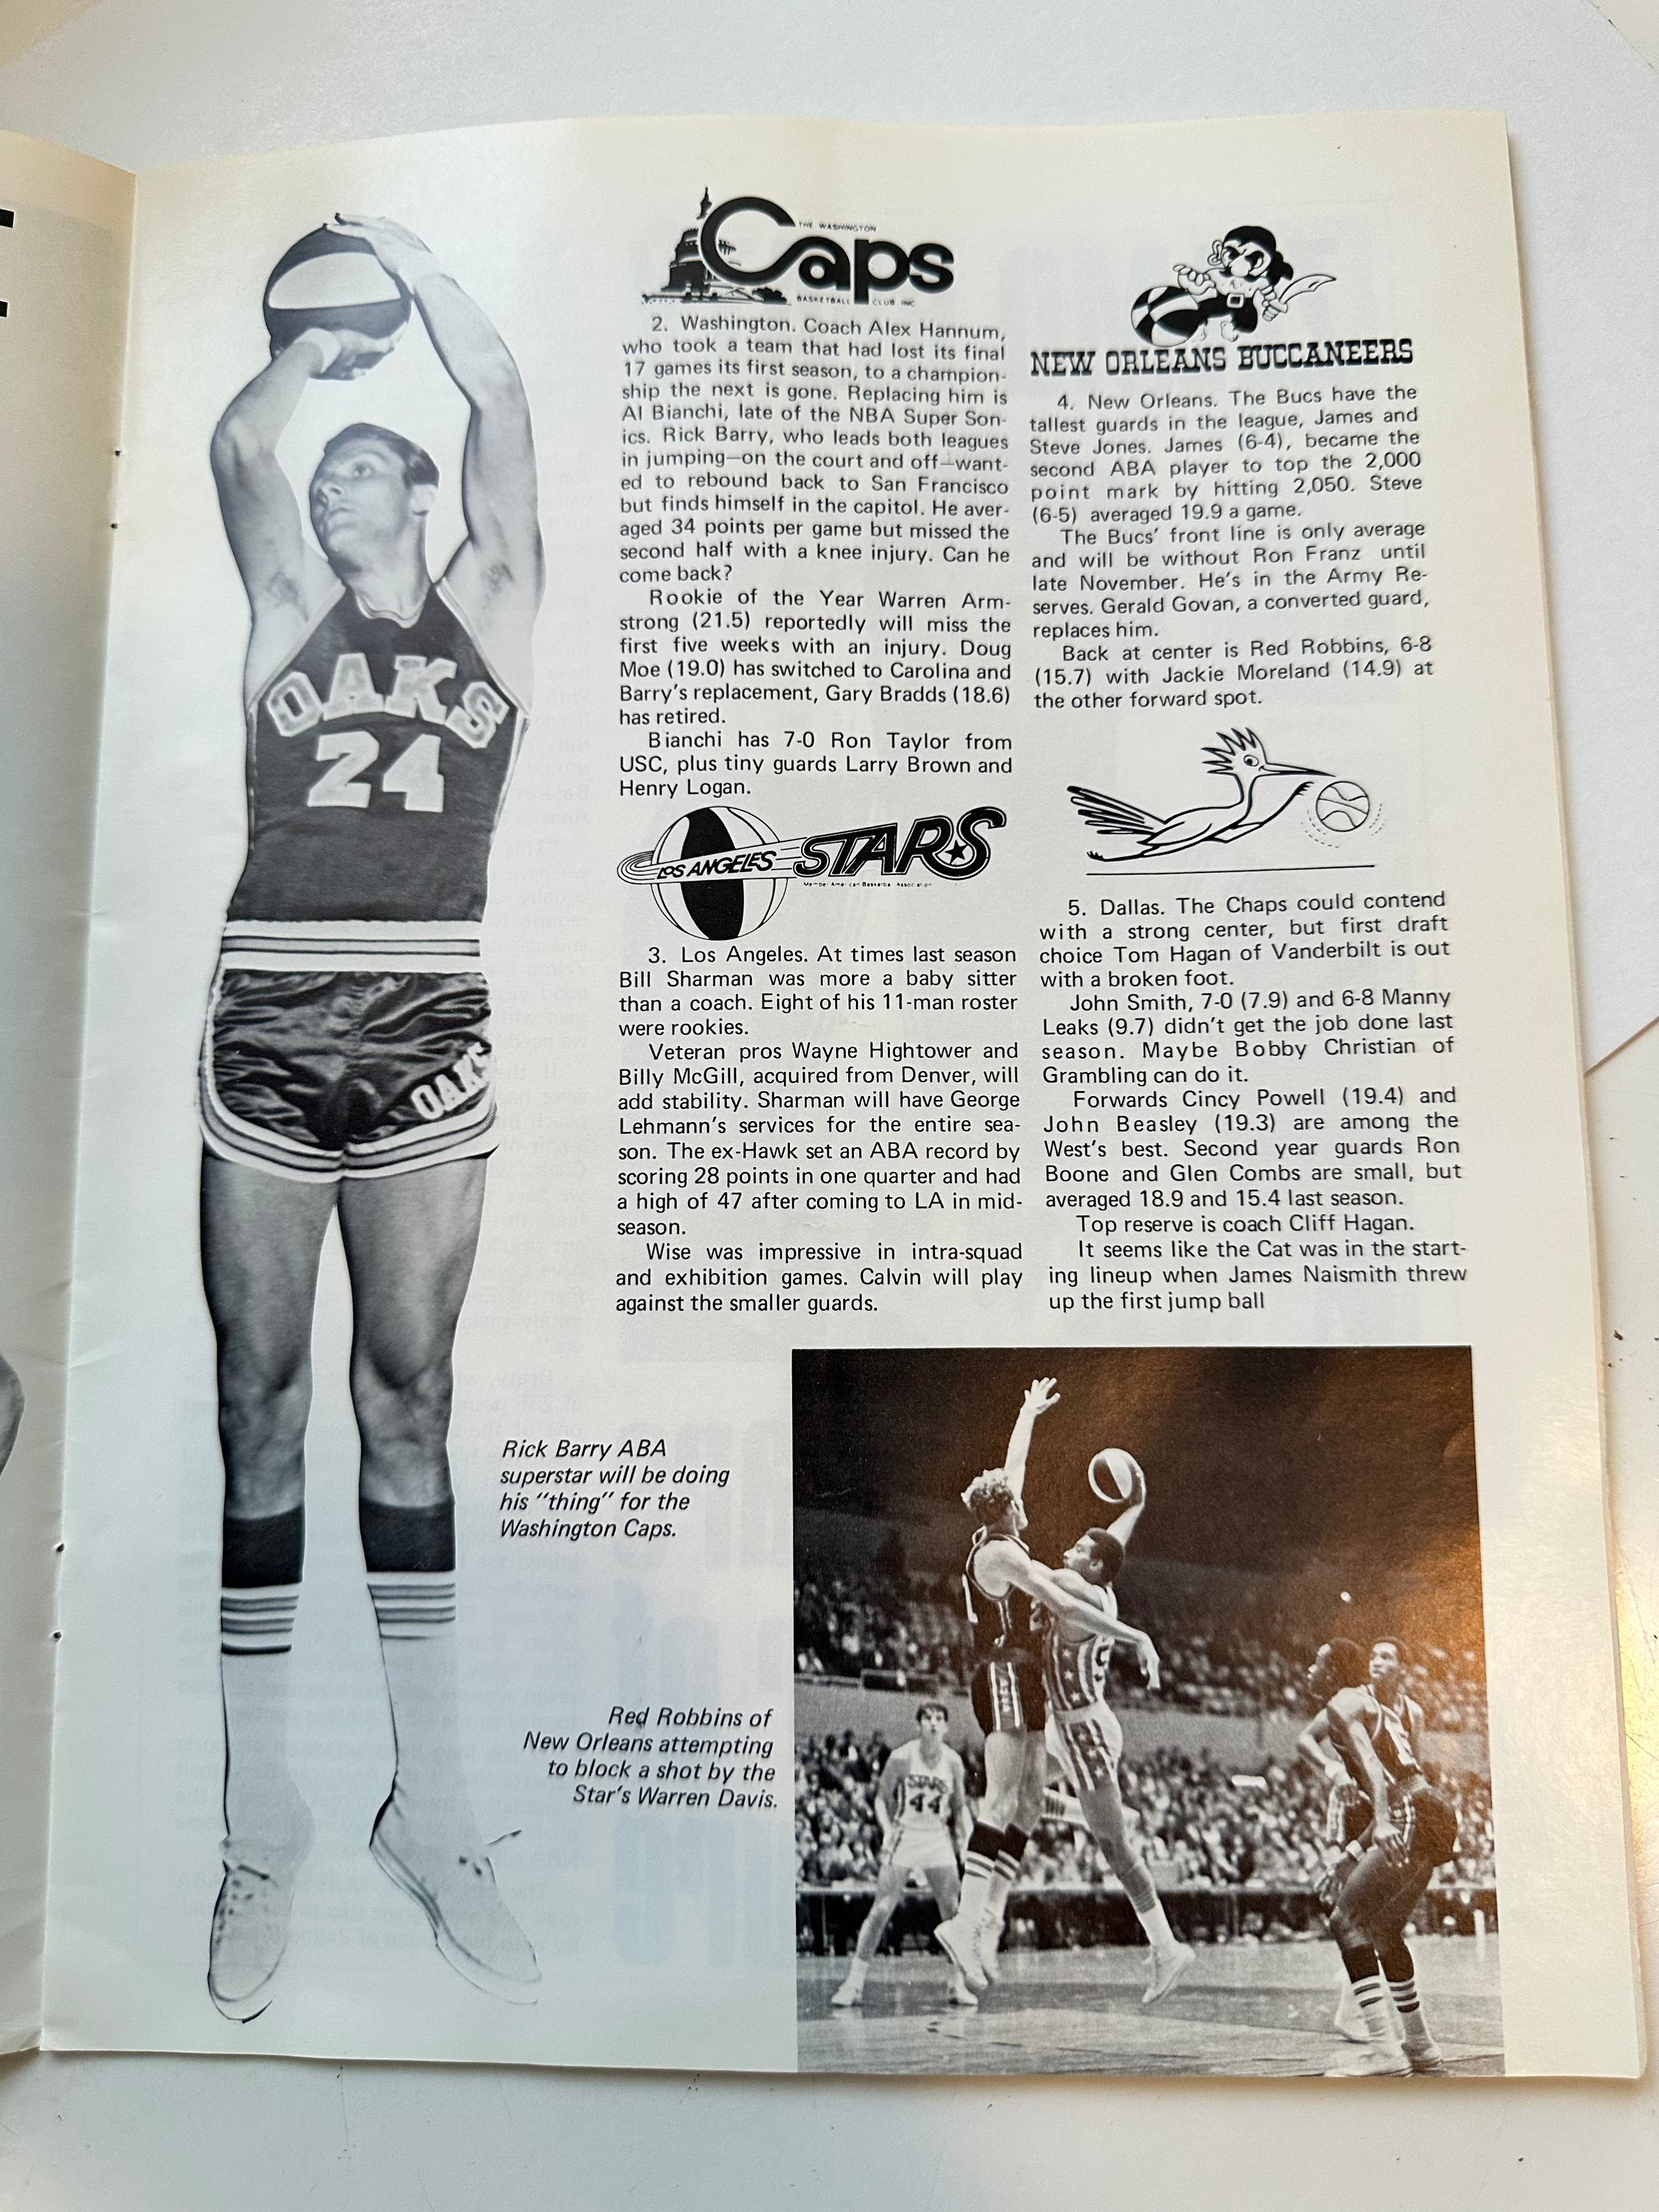 LA Stars Vs Pacers basketball ABA original program 1969